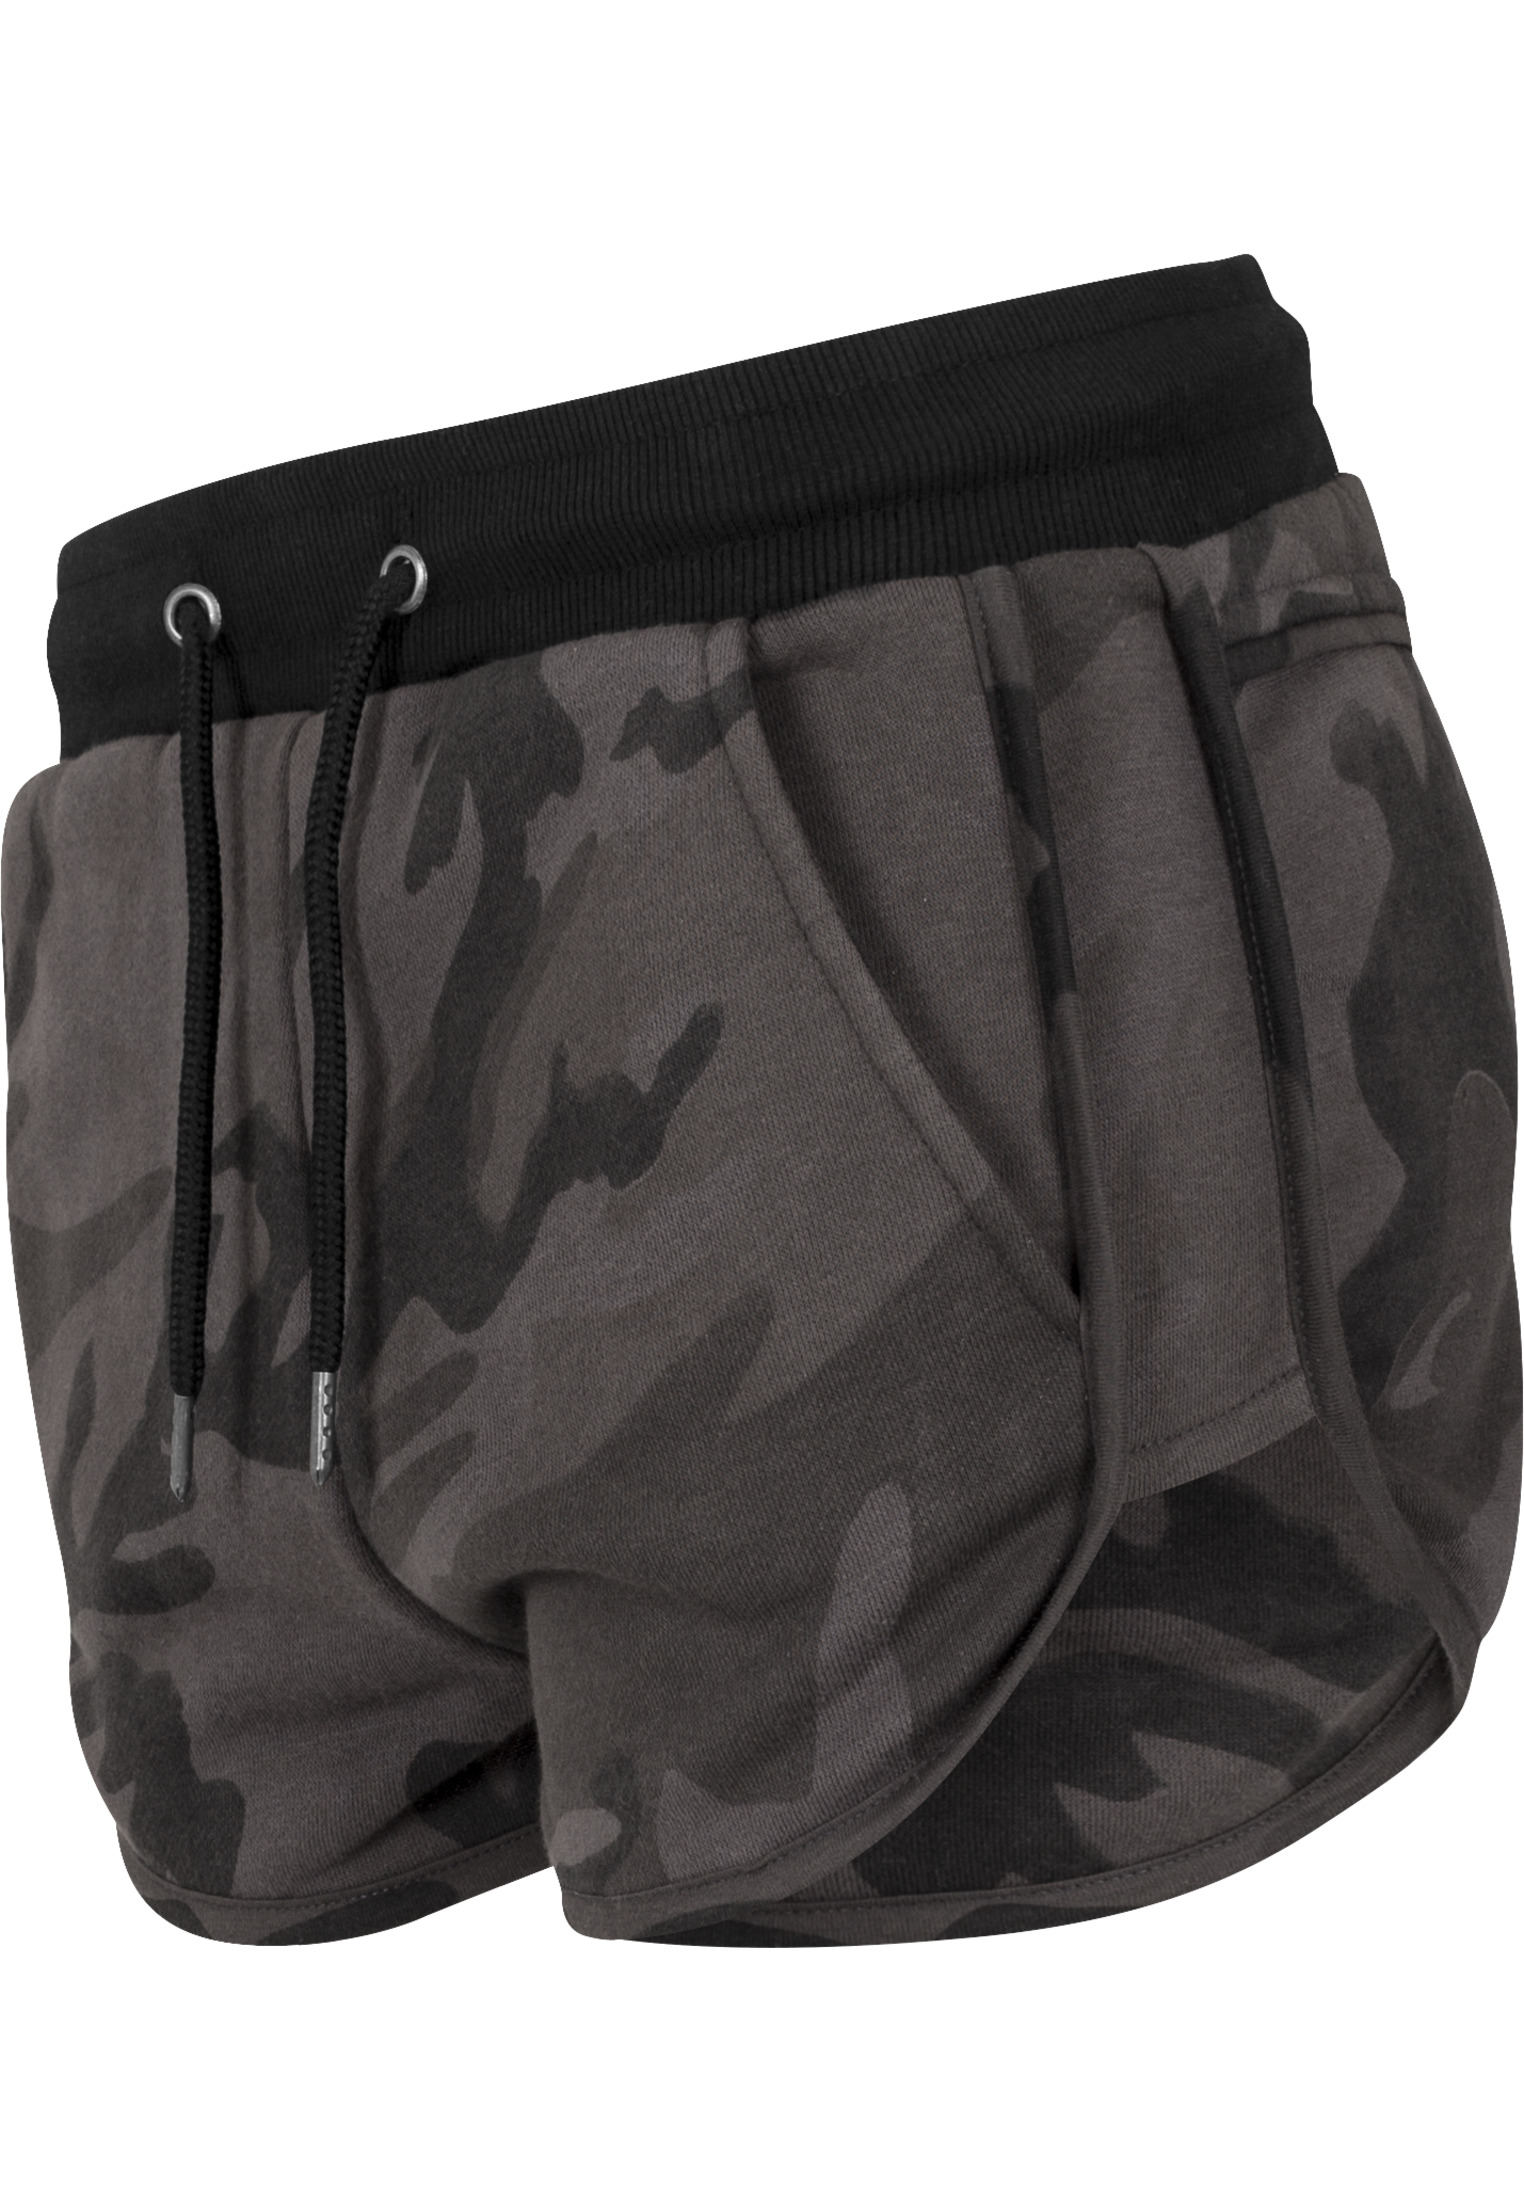 Kurze Hosen Ladies Camo Hotpants in Farbe dark camo/blk